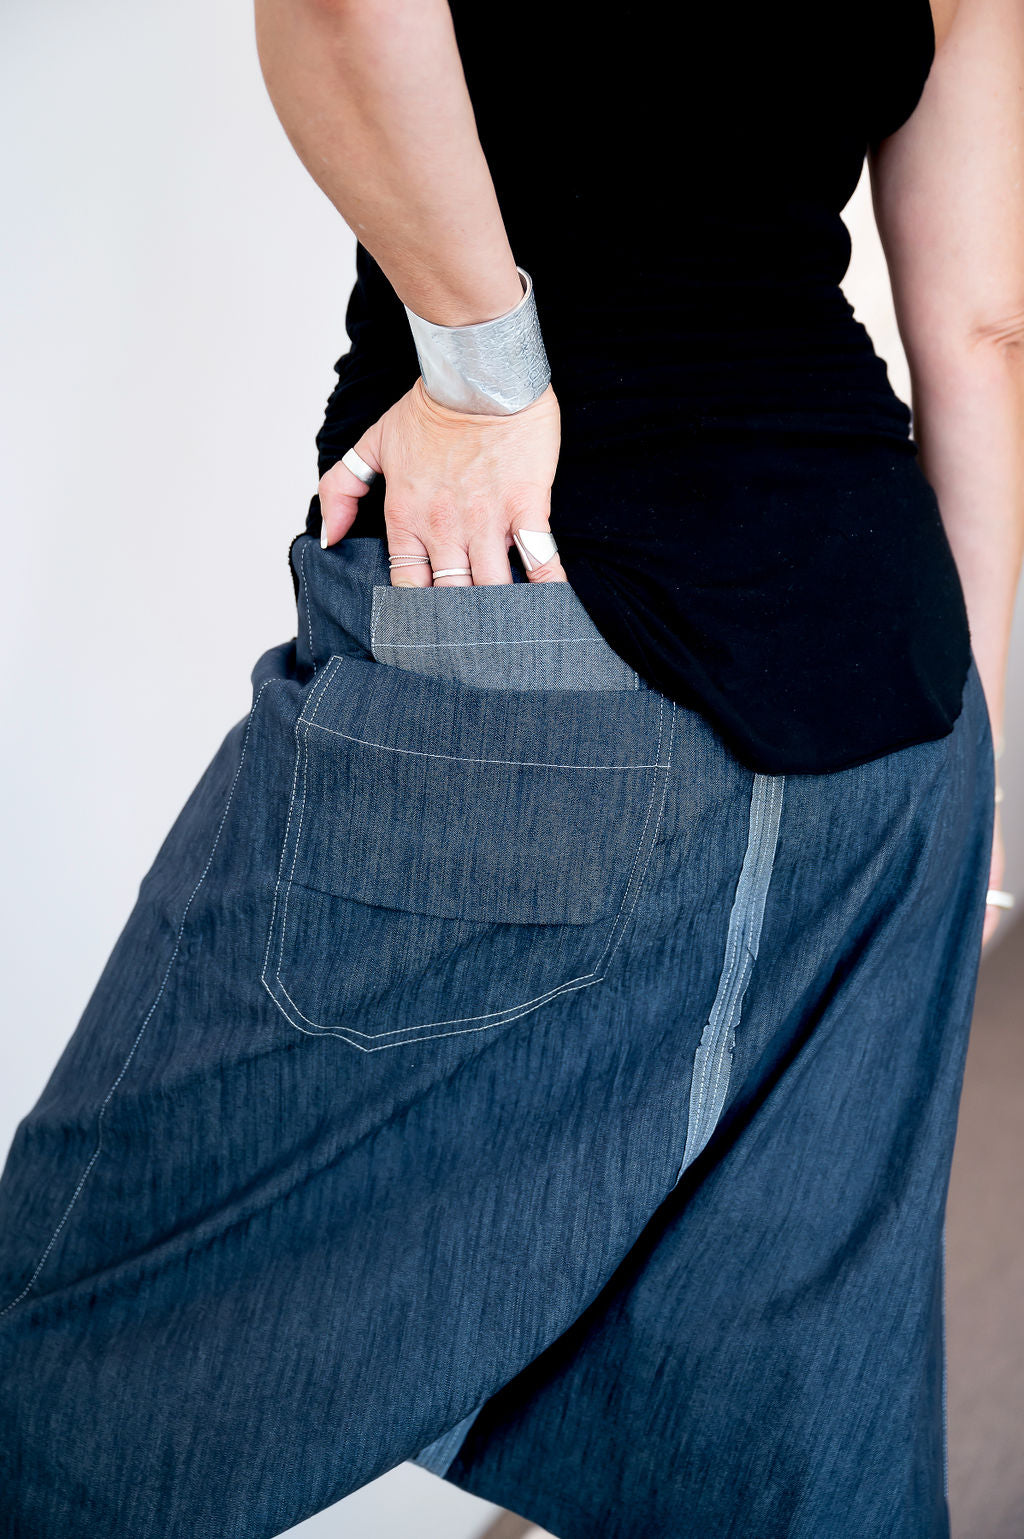 Close-up of a designer adjusting a textured denim garment, focusing on the unique pocket details and seams